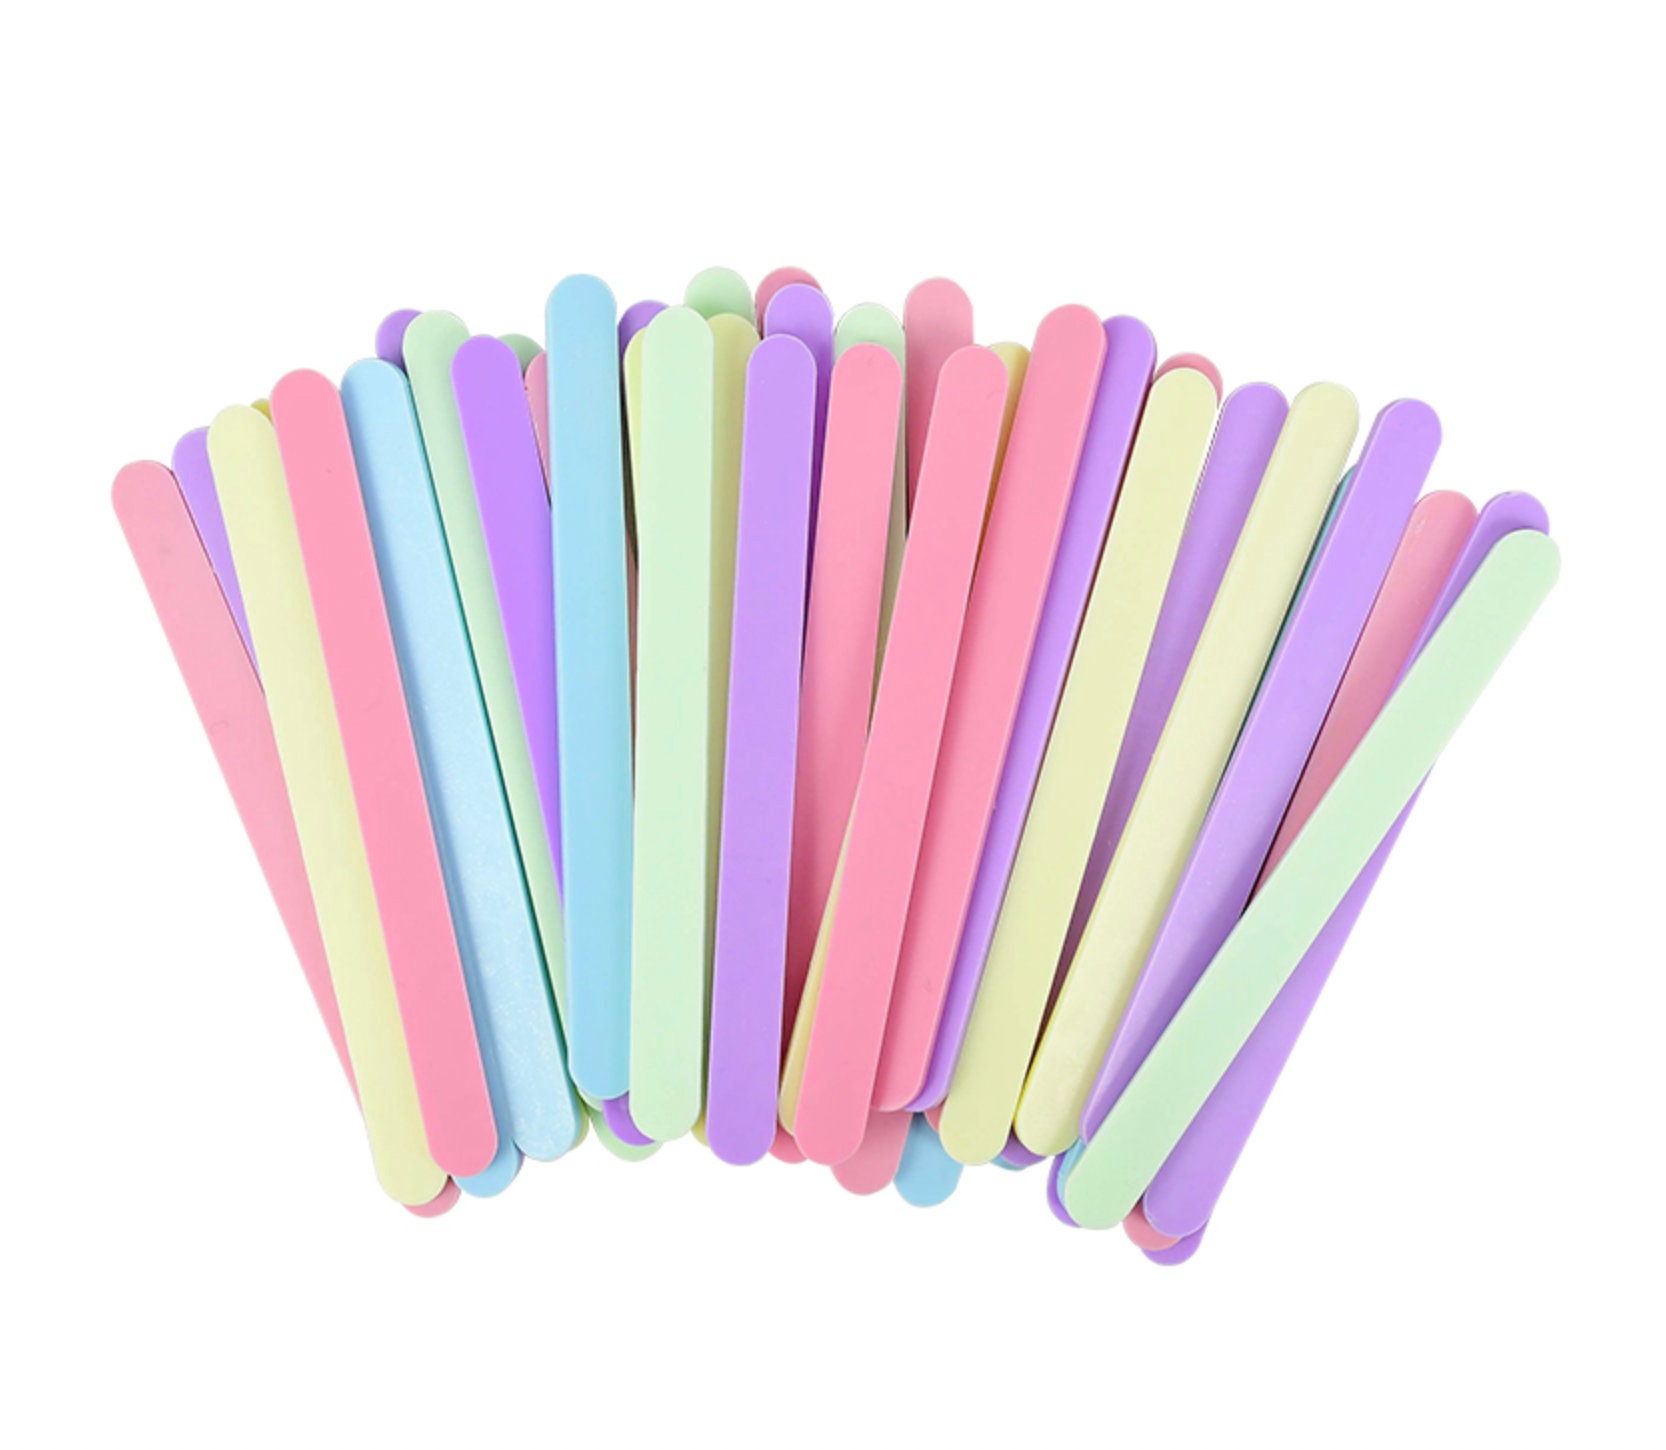 200 Pcs Craft Sticks Ice Cream Sticks Natural Wood Popsicle Craft Sticks 4.5 inch Length Treat Sticks Ice Pop Sticks for DIY Crafts